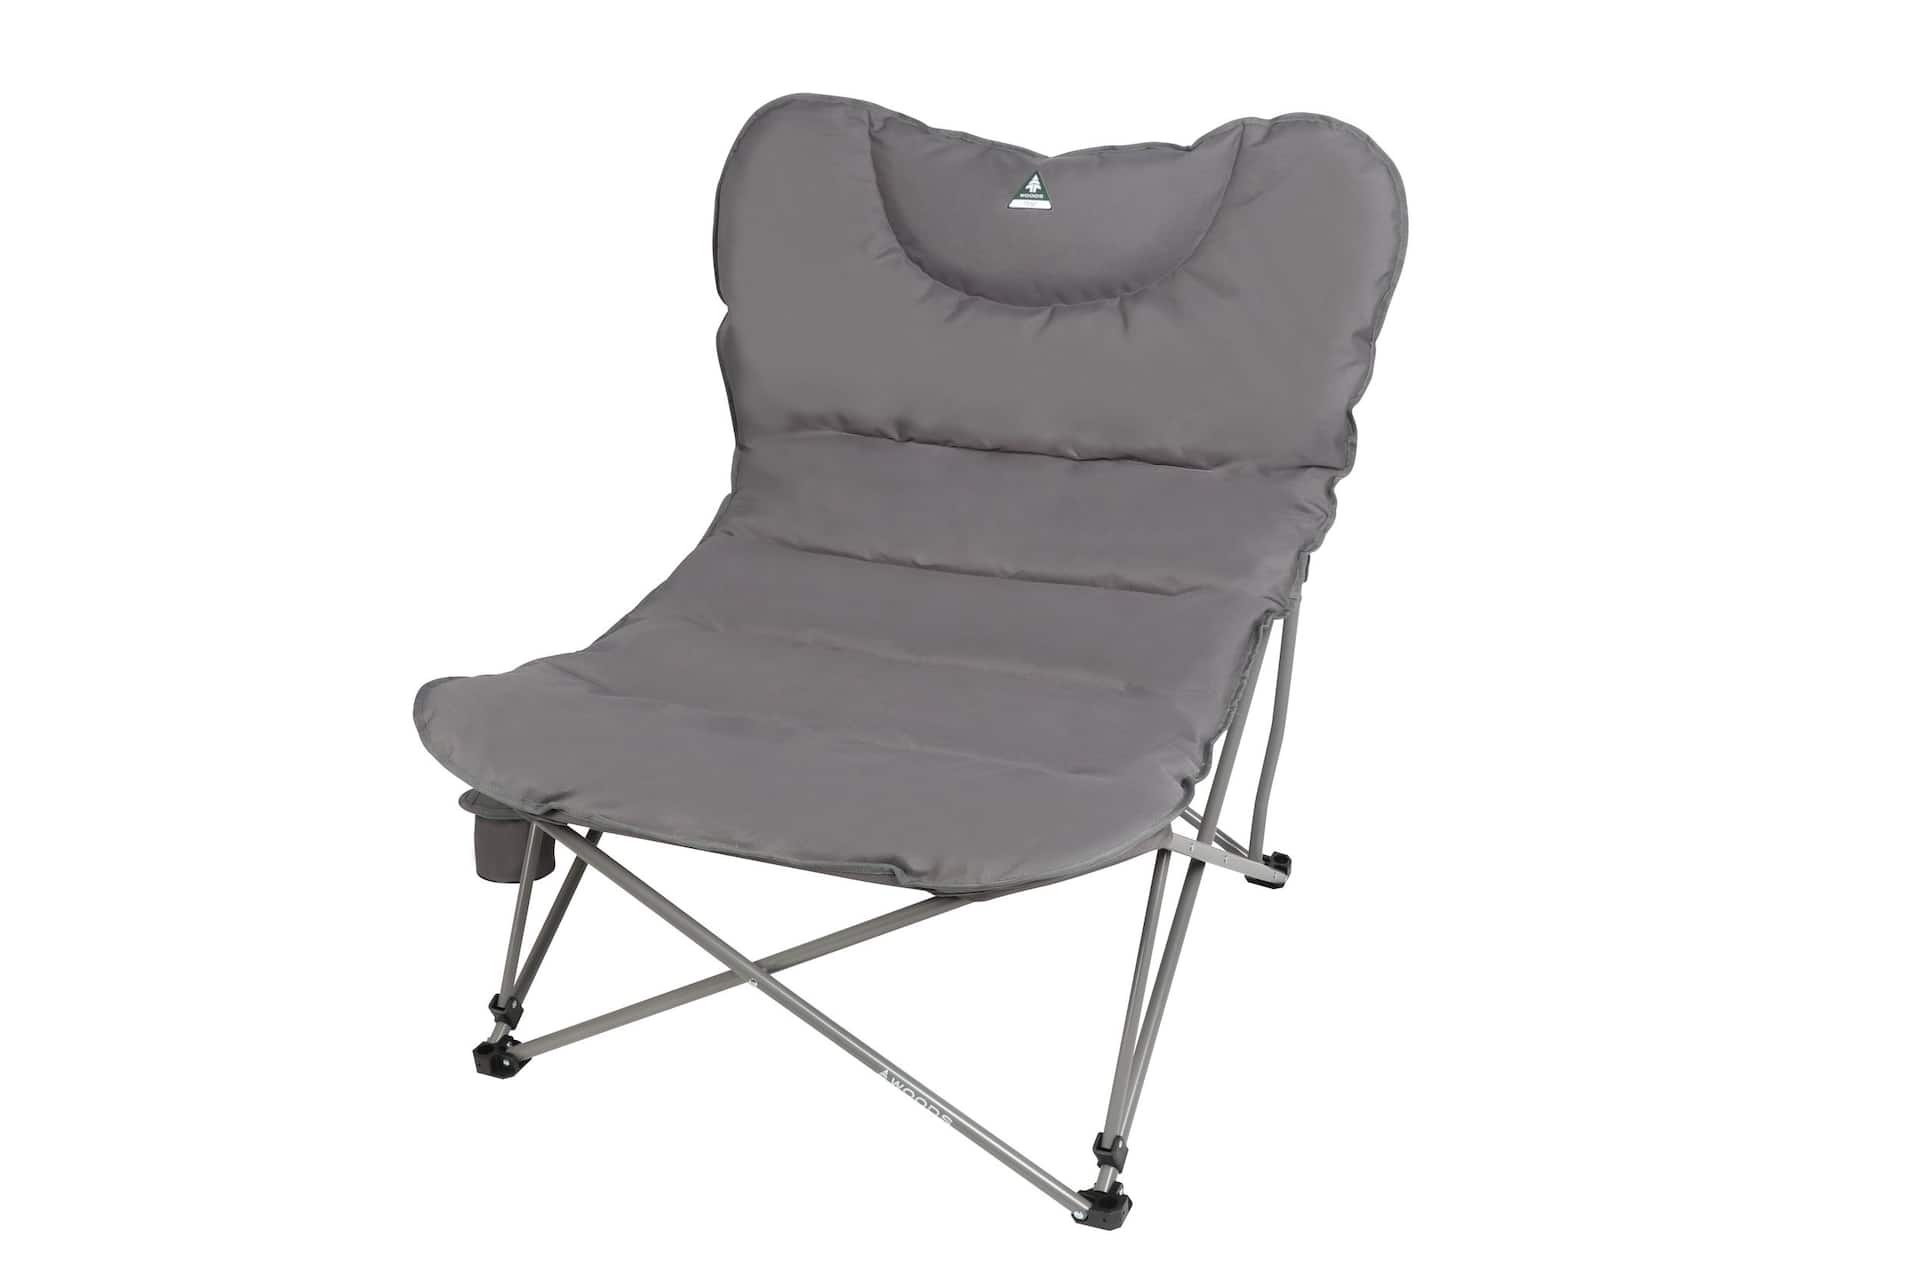 Woods™ Mammoth Folding Padded Camping Chair, Gun Metal